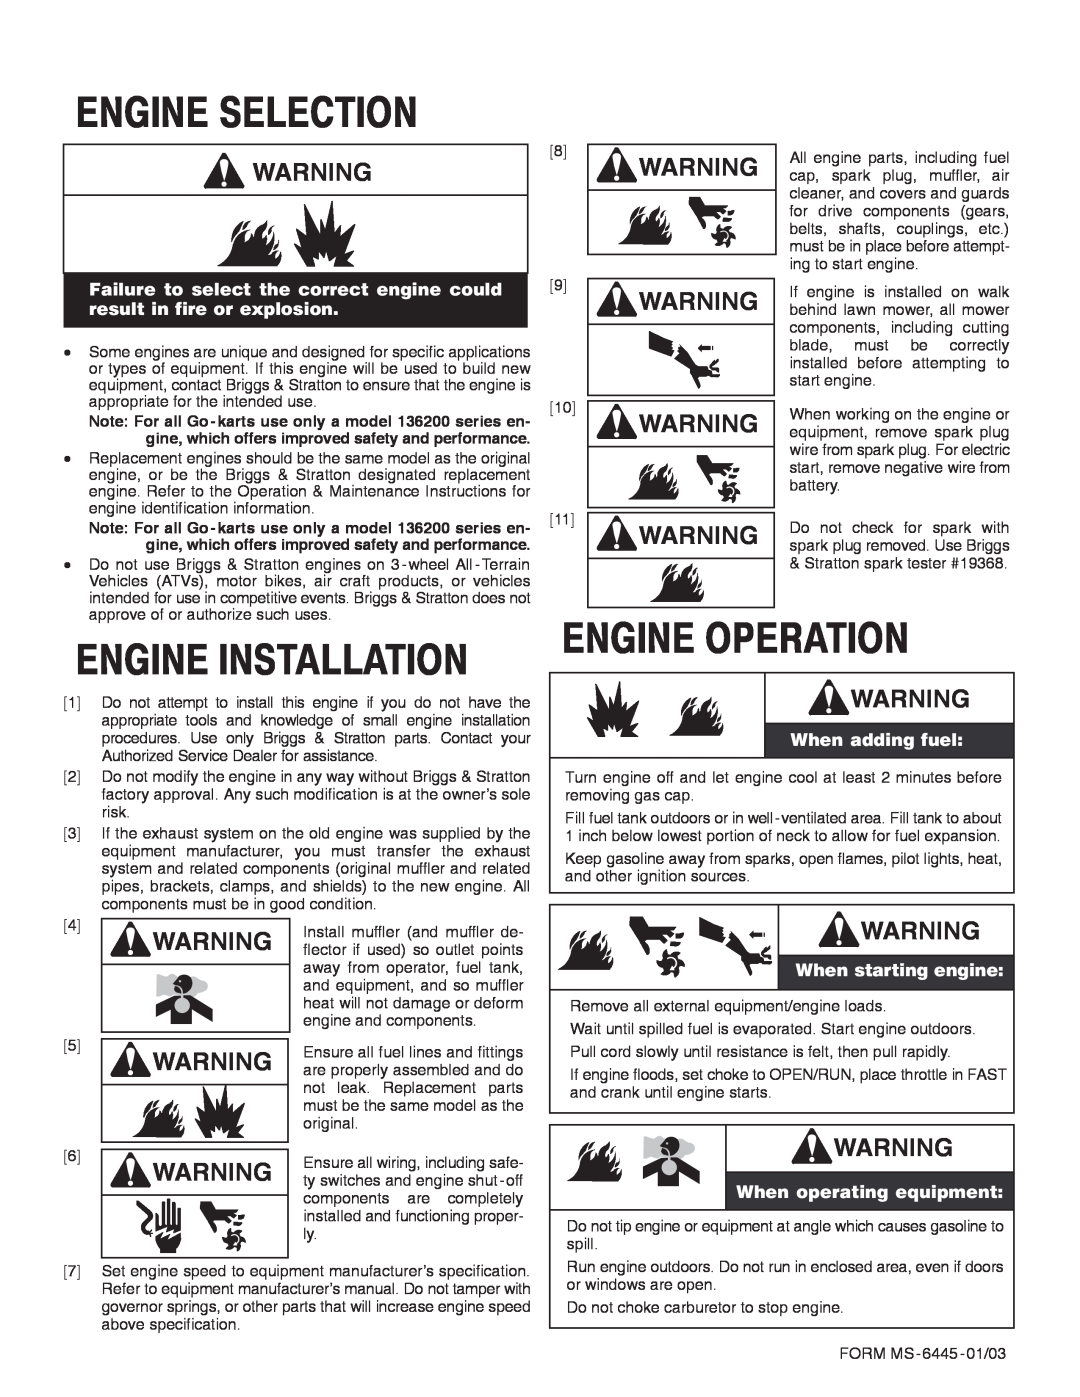 Briggs & Stratton 8-P Engine Selection, Engine Installation, Engine Operation, When adding fuel, When starting engine 